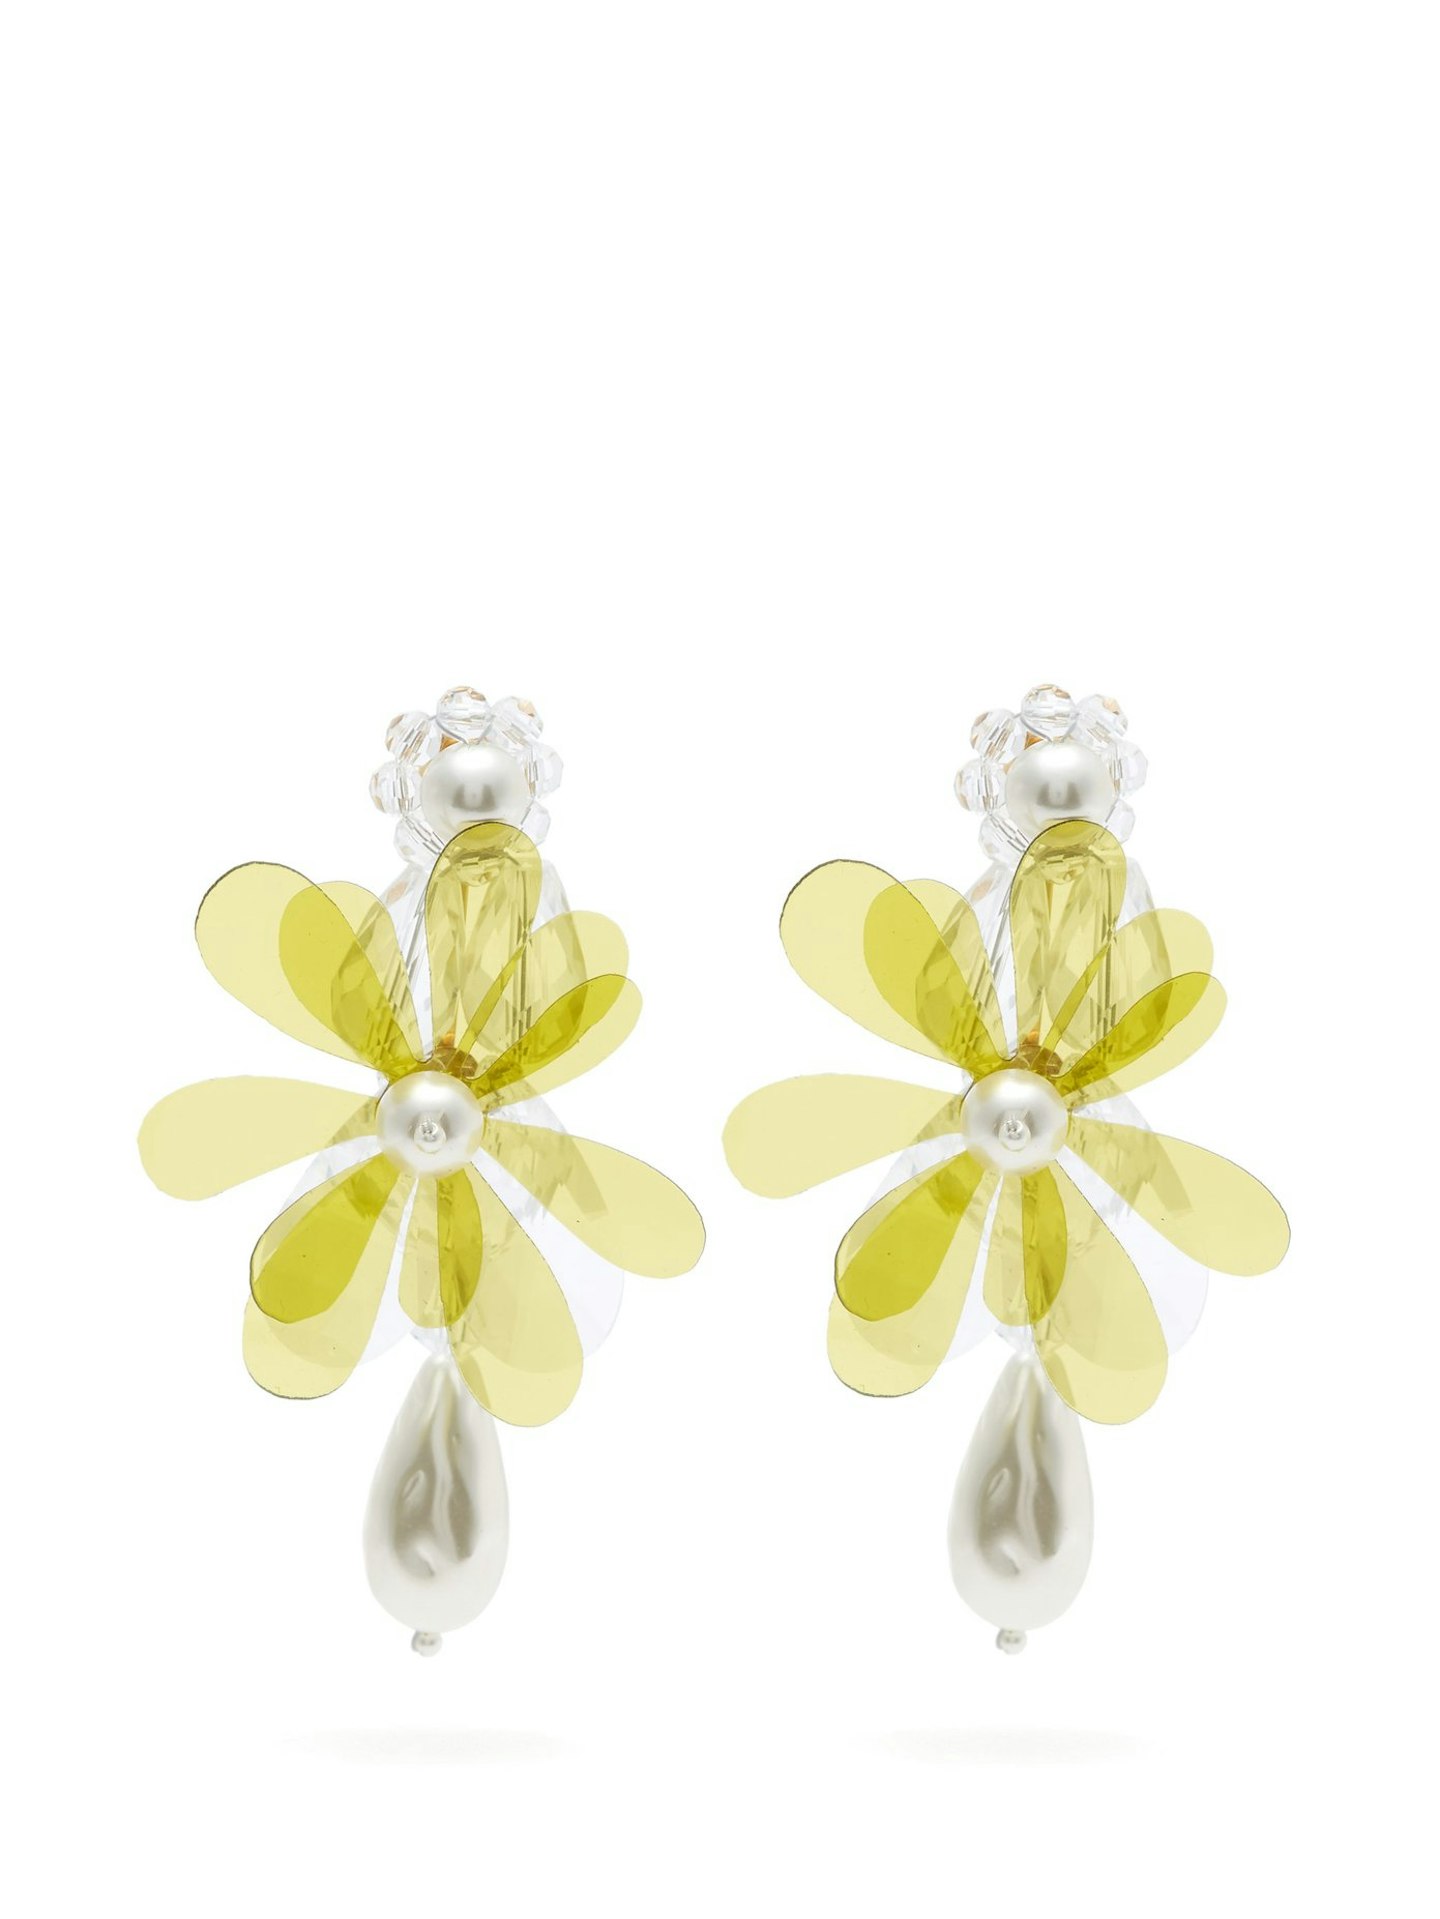 Simone Rocha, Beaded Flower Drop Earrings, £370, Matchesfashion.com